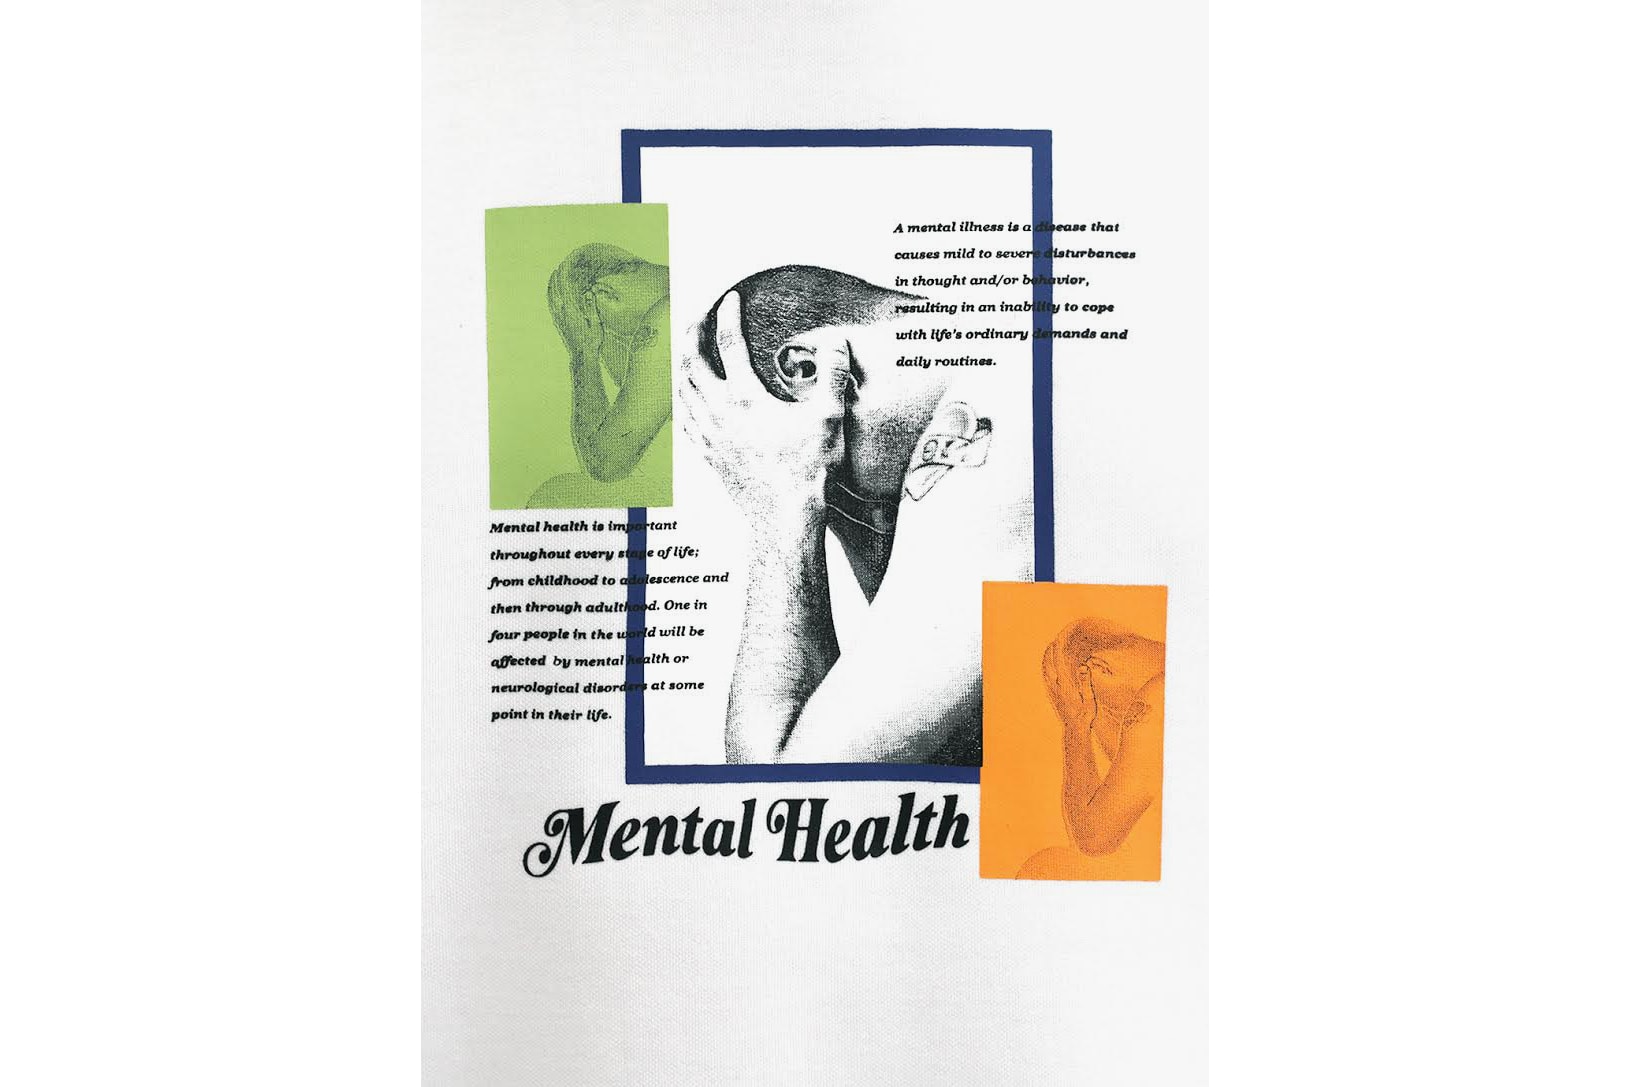 Danielle Guizio Mental Health Awareness T-Shirt Wellness Charity